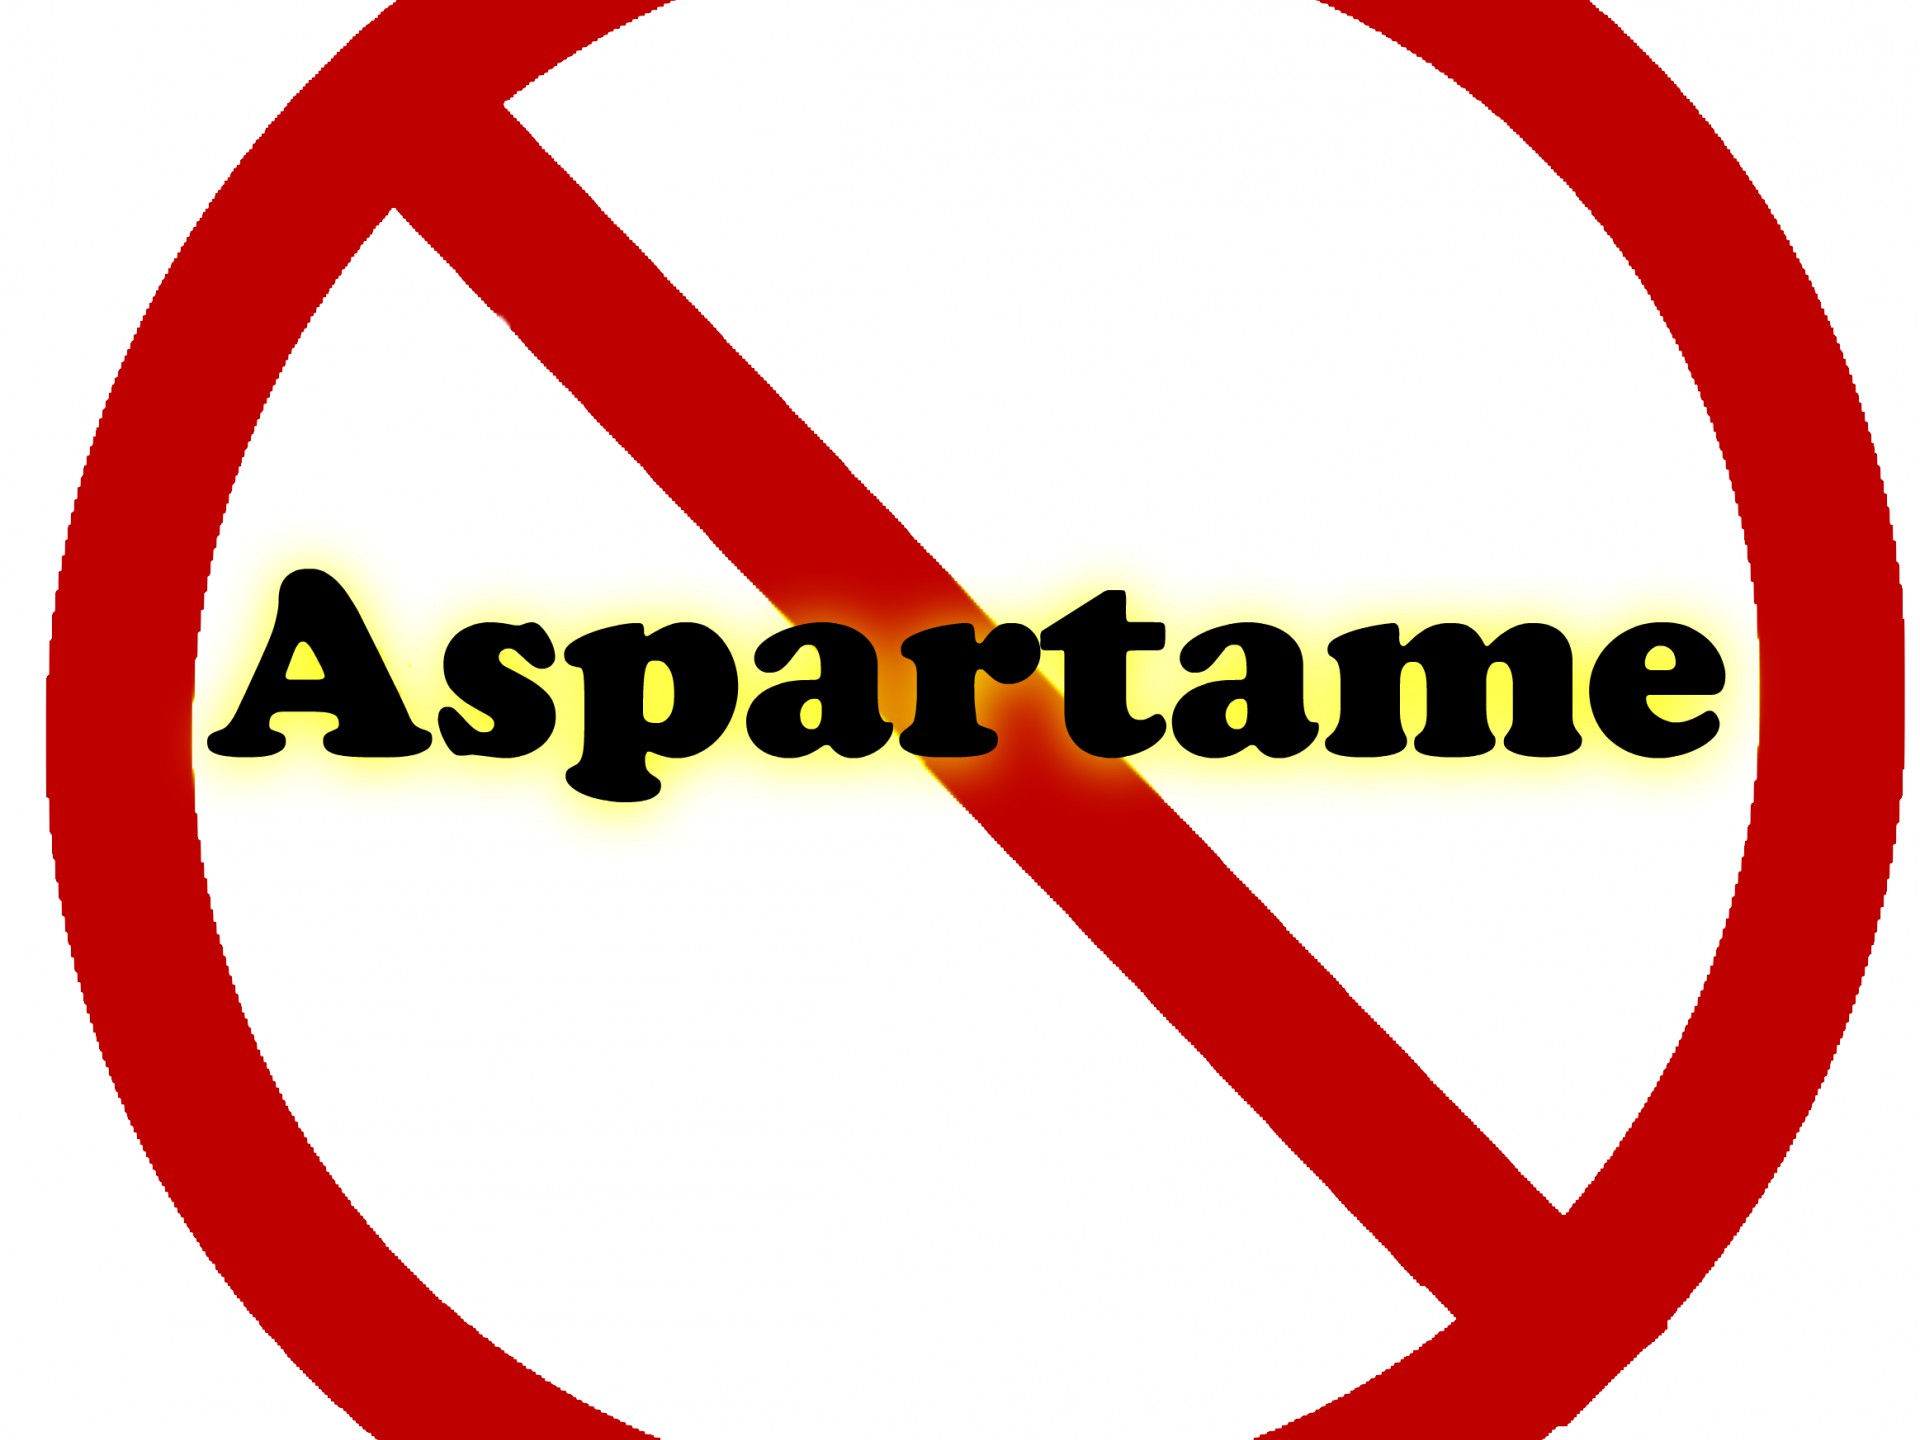 Leaked Podesta emails confirm suspicions about aspartame dangers